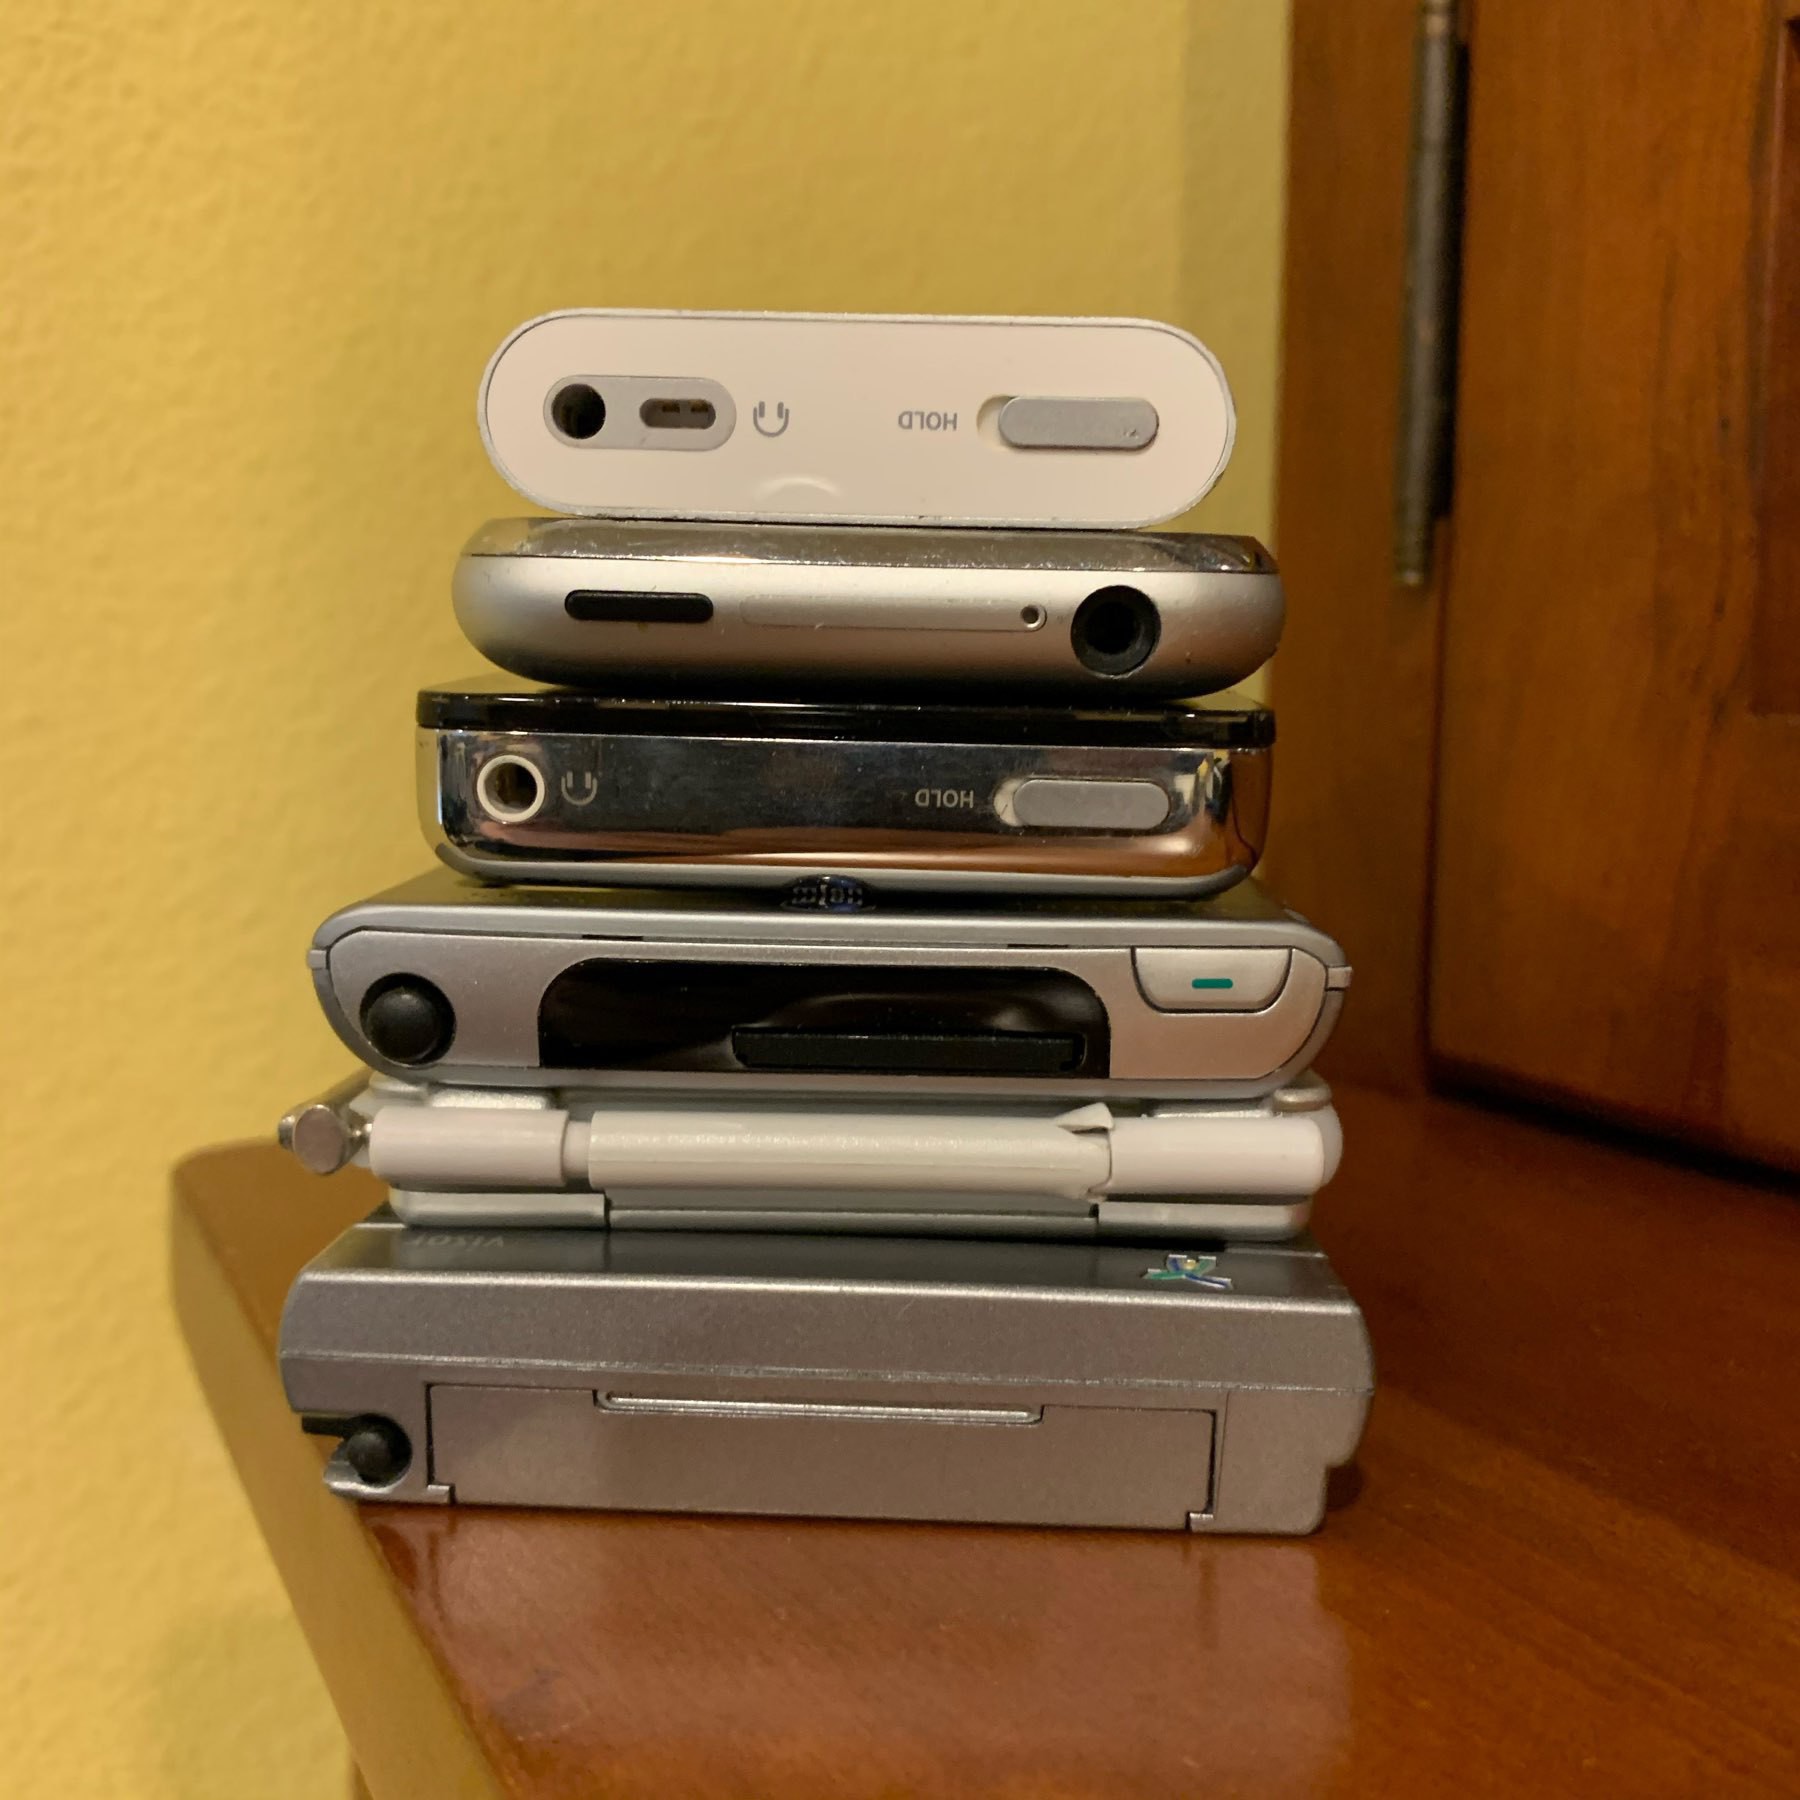 Top to bottom: iPod mini, Gen 1 iPhone, iPod, Palm Tungsten T3, Handspring Visor Edge, Handspring Visor Platinum